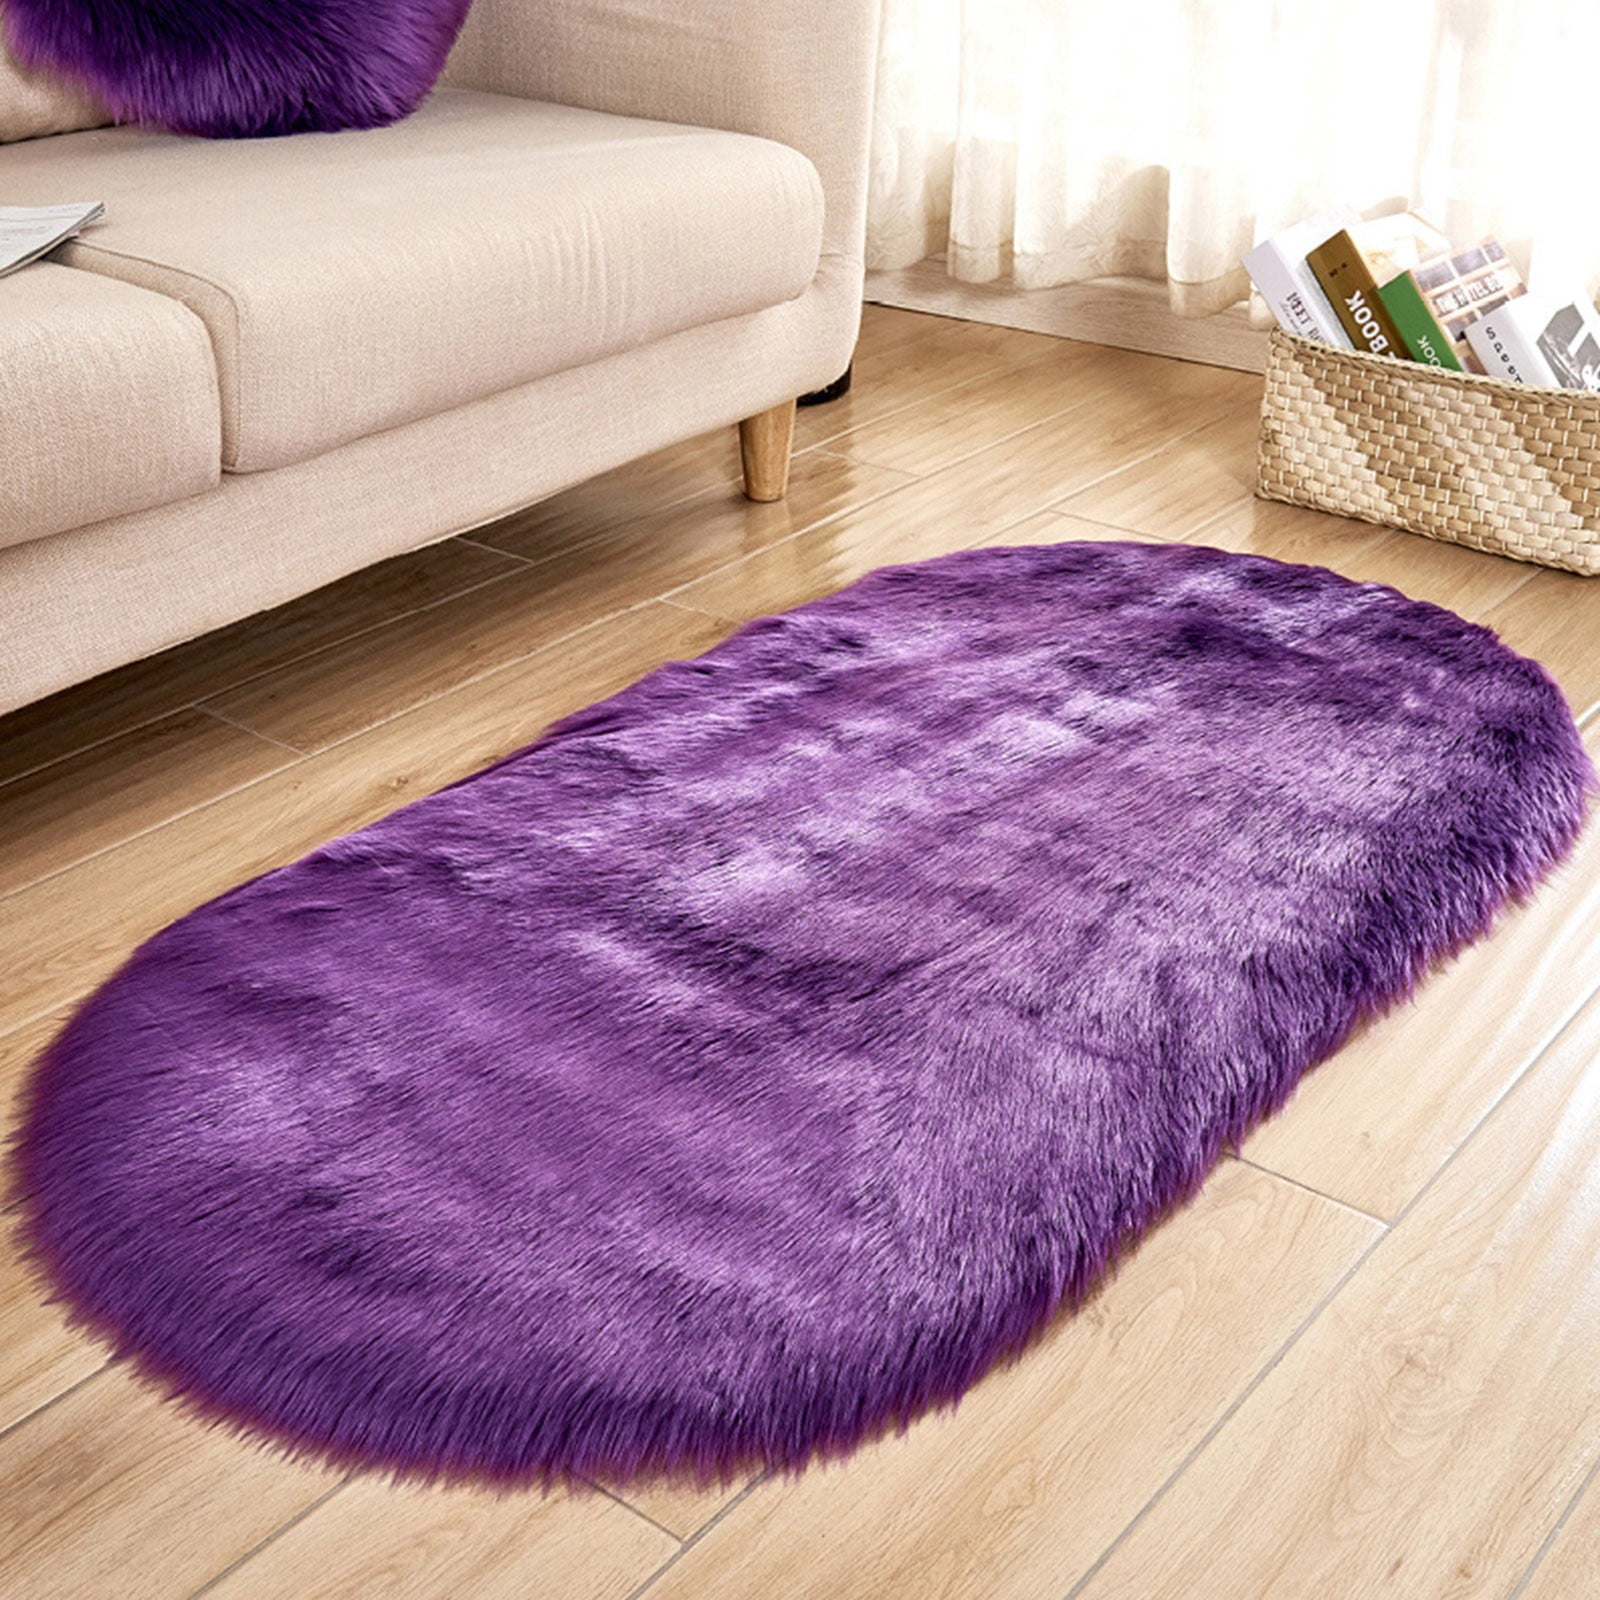 jiuke-practical-super-soft-faux-sheepskin-area-rugs-for-bedroom-floor